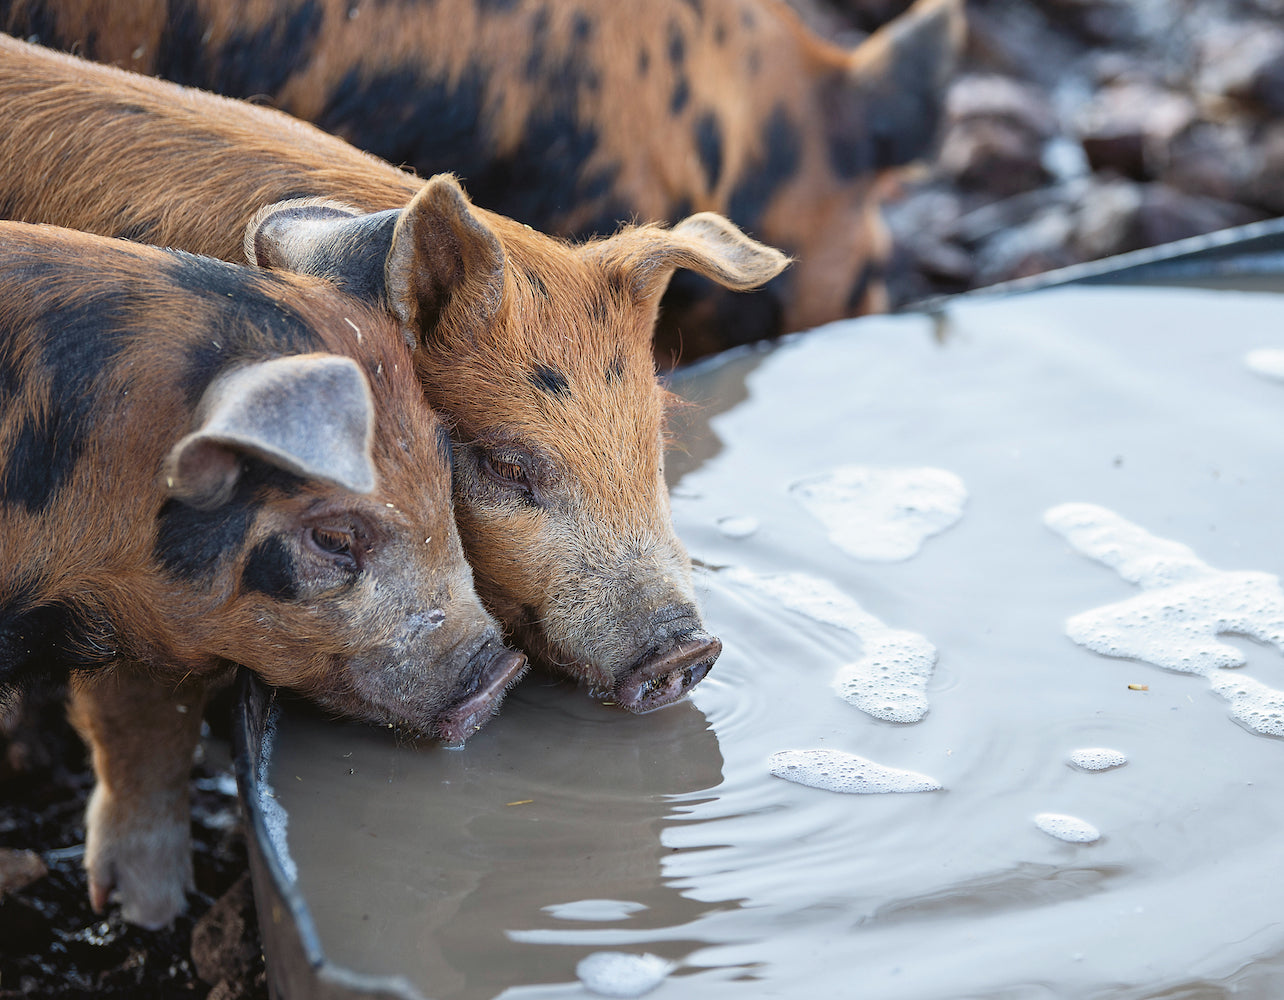 What do pasture-raised pigs eat?